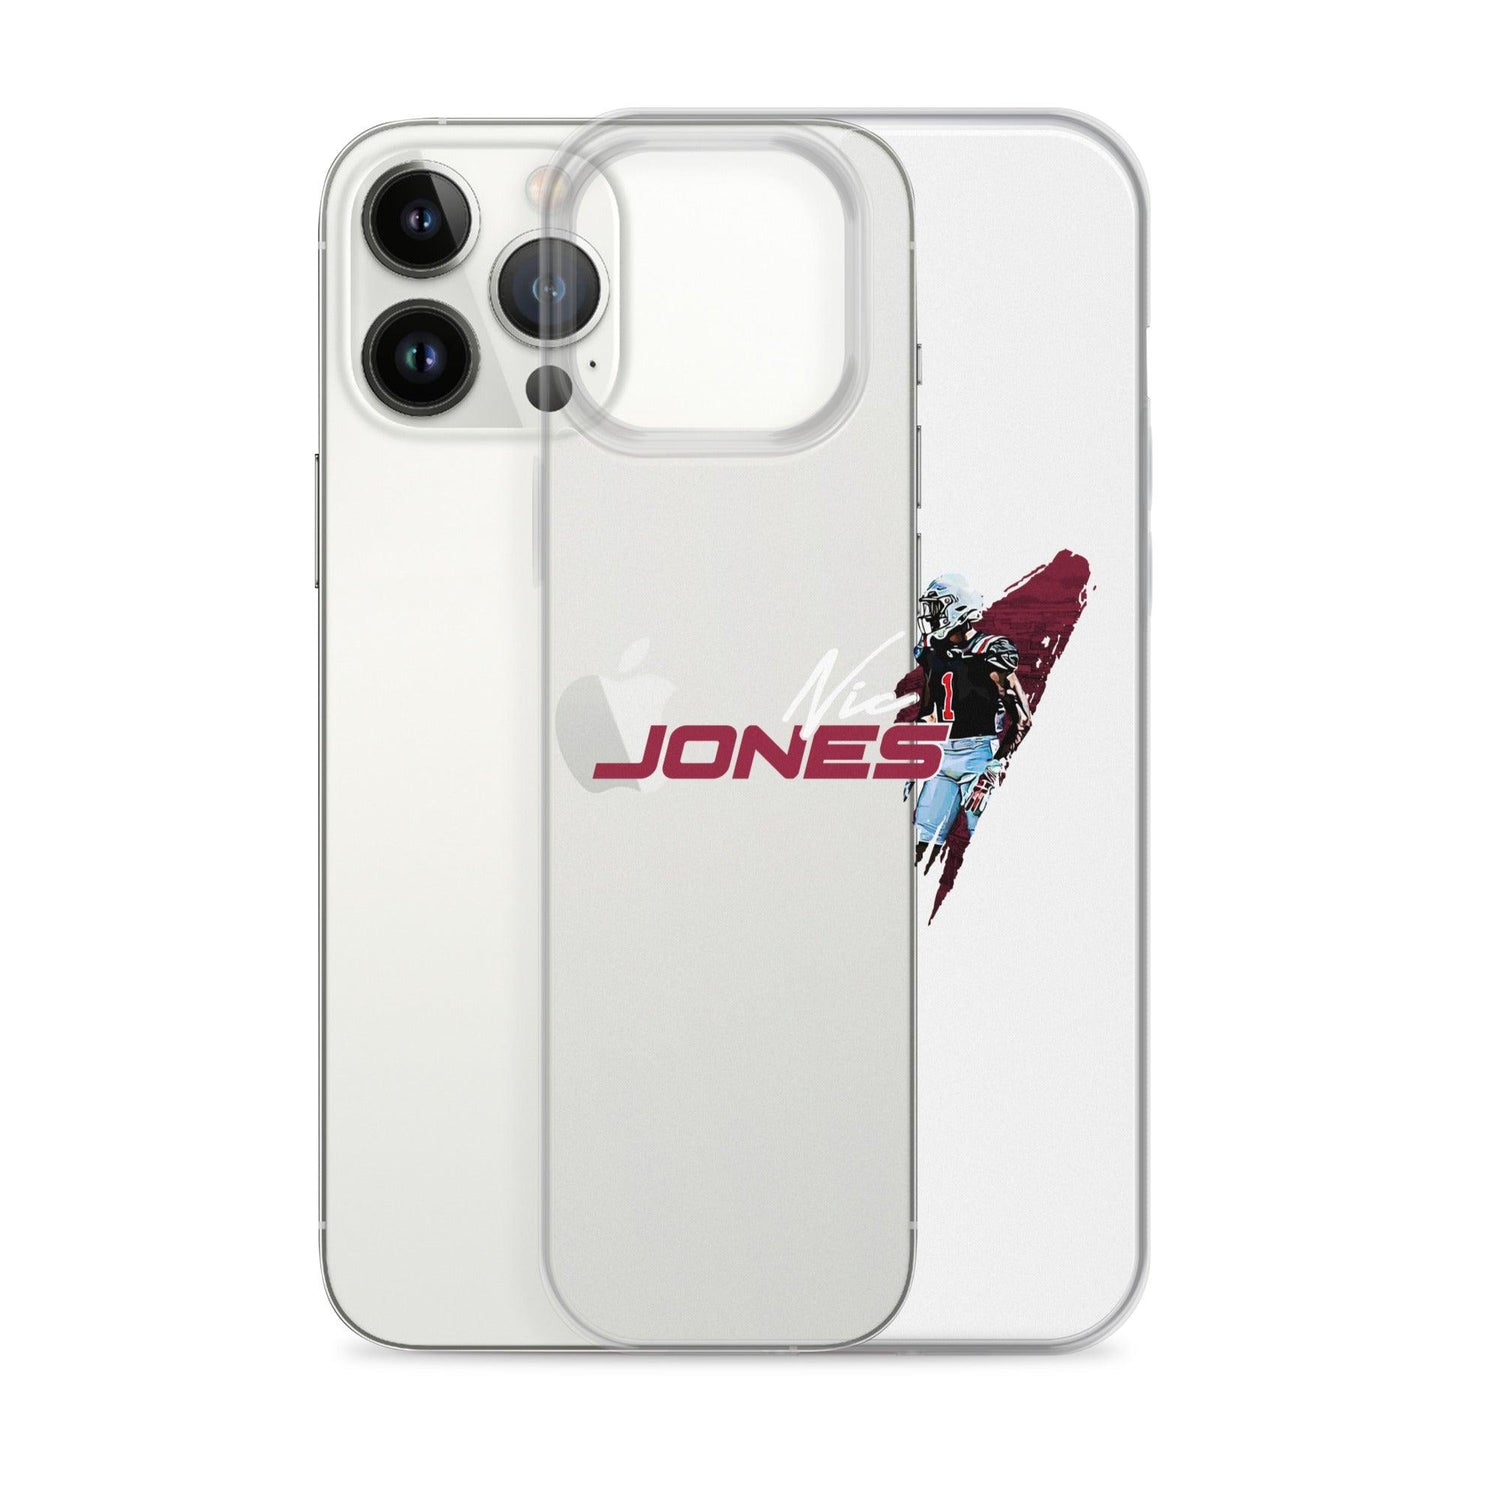 Nic Jones "Essential" iPhone Case - Fan Arch